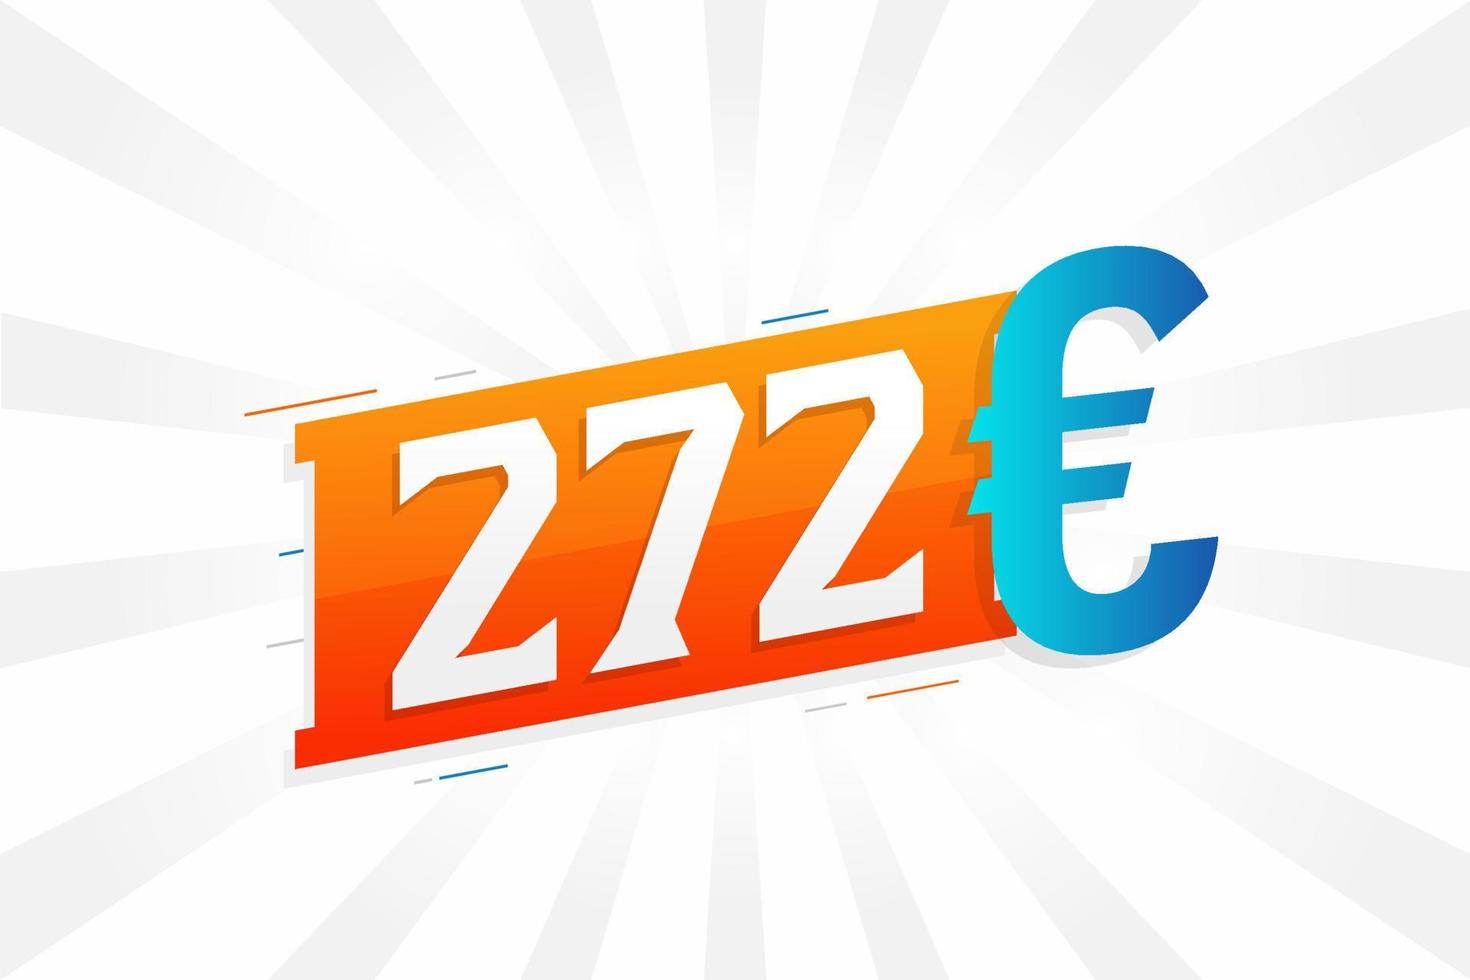 Símbolo de texto vectorial de moneda de 272 euros. 272 euro vector de stock de dinero de la unión europea